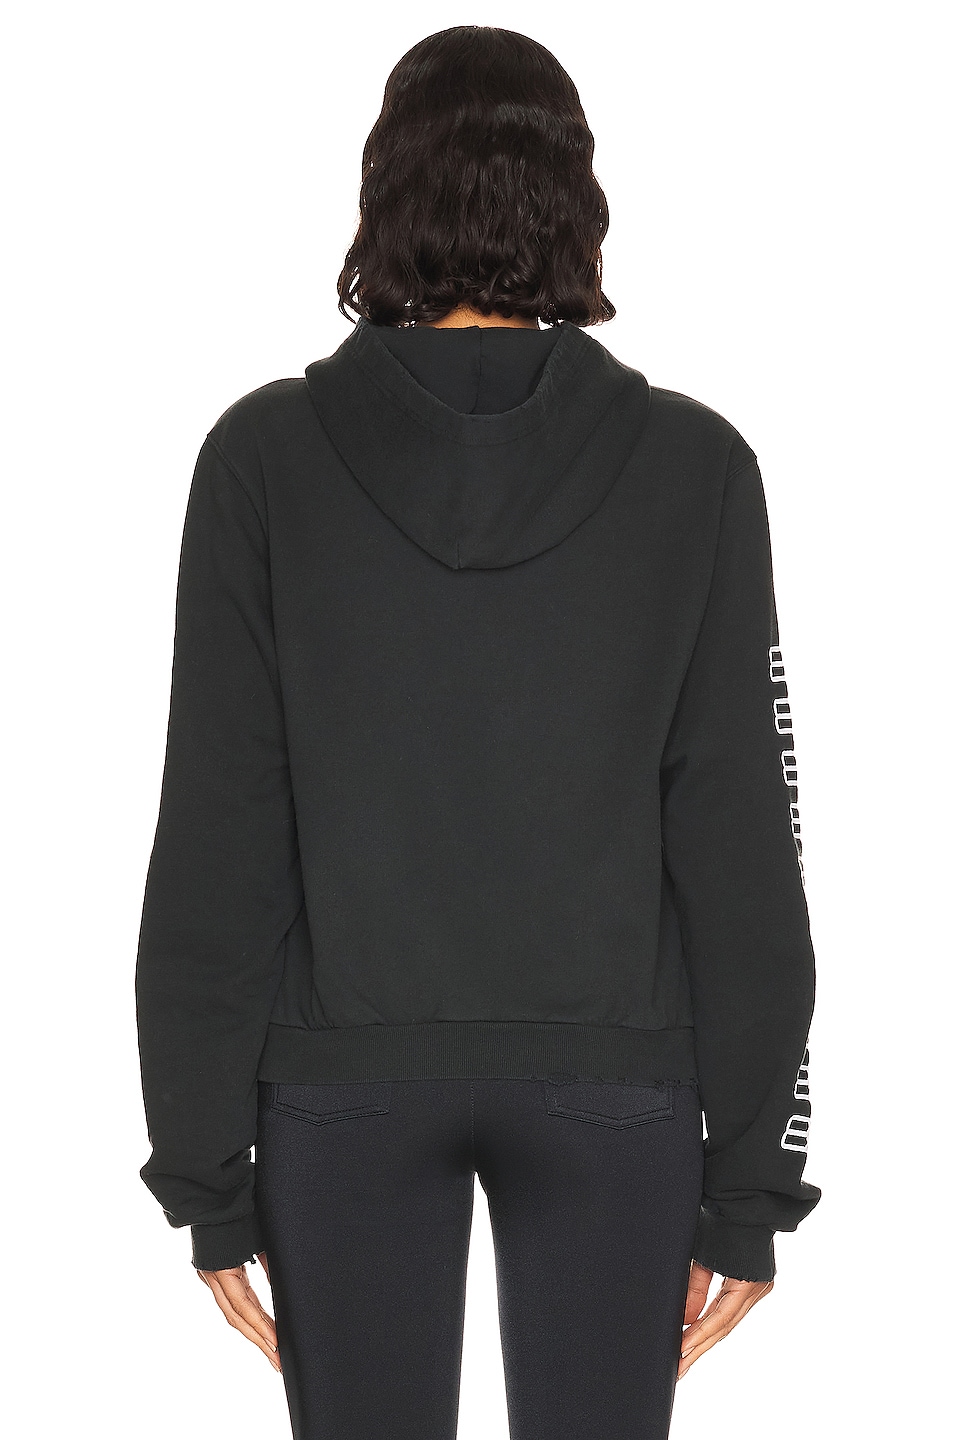 Balenciaga BB License Zip Up Hoodie in Washed Black & White | FWRD